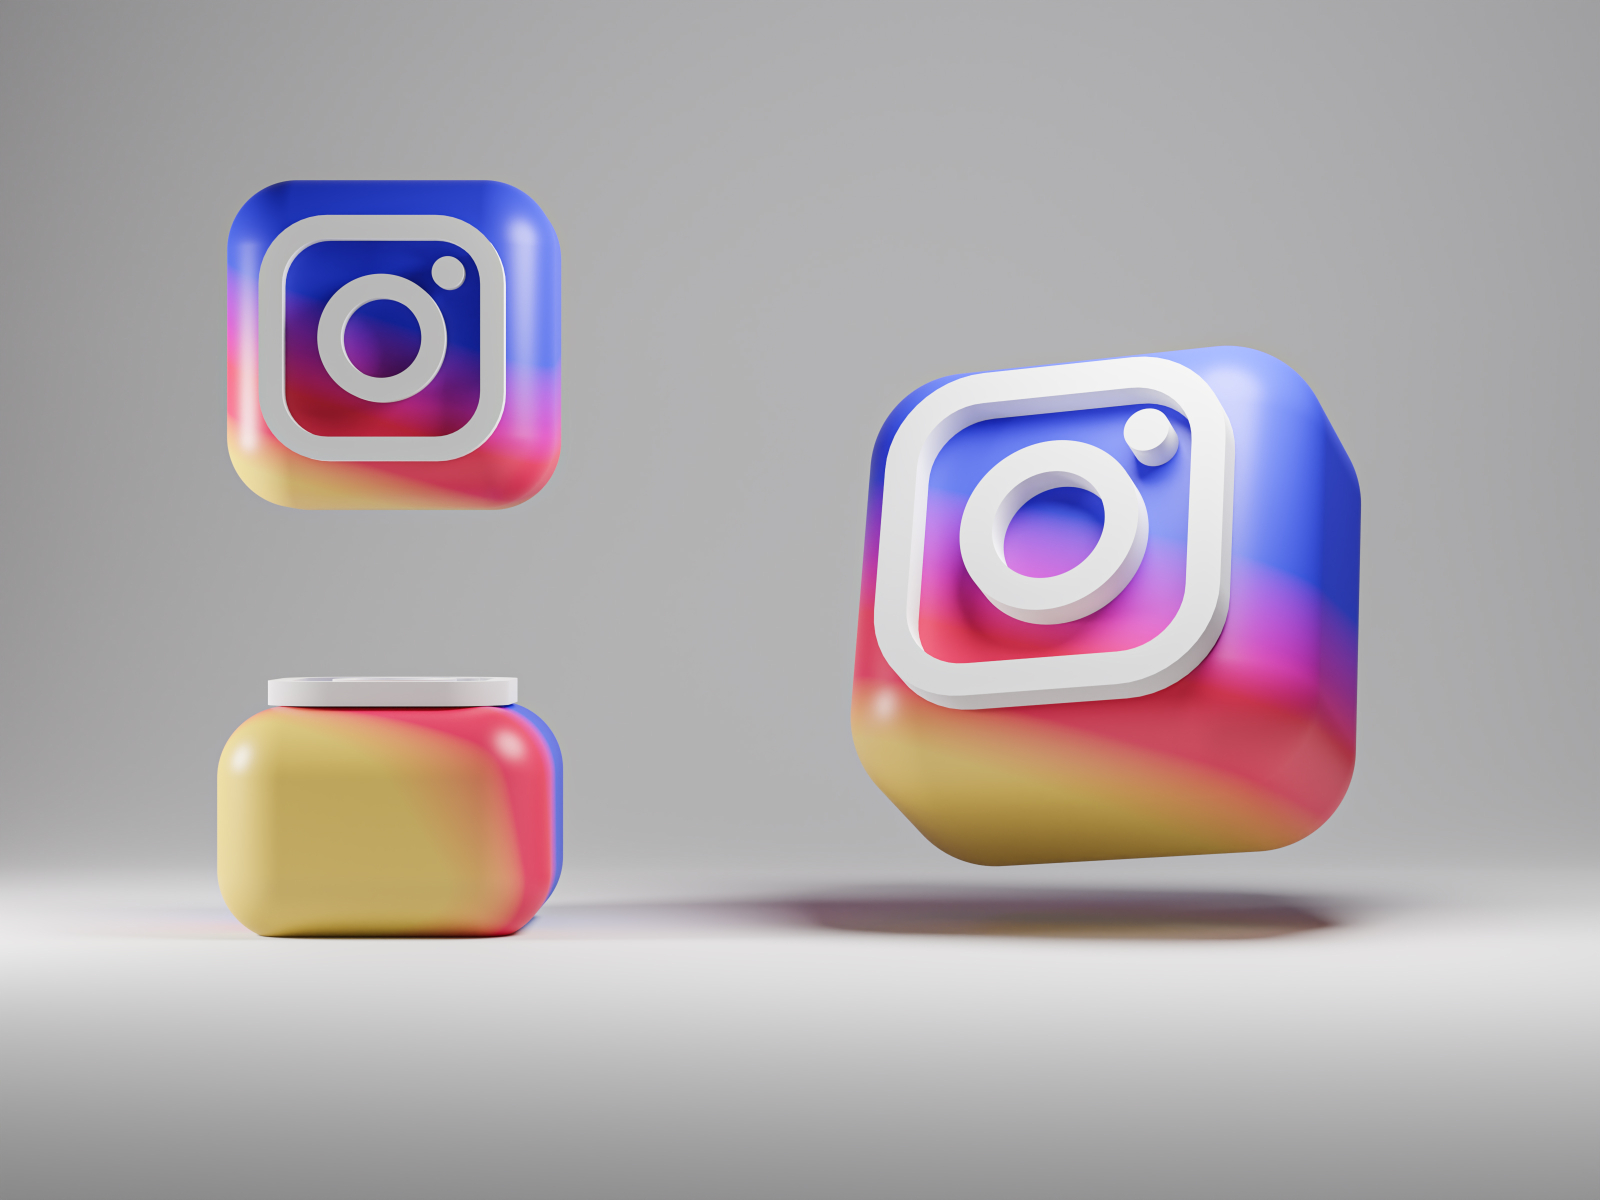 3D Instagram logos - how to create suitable 3D logo textures | Pixellogo